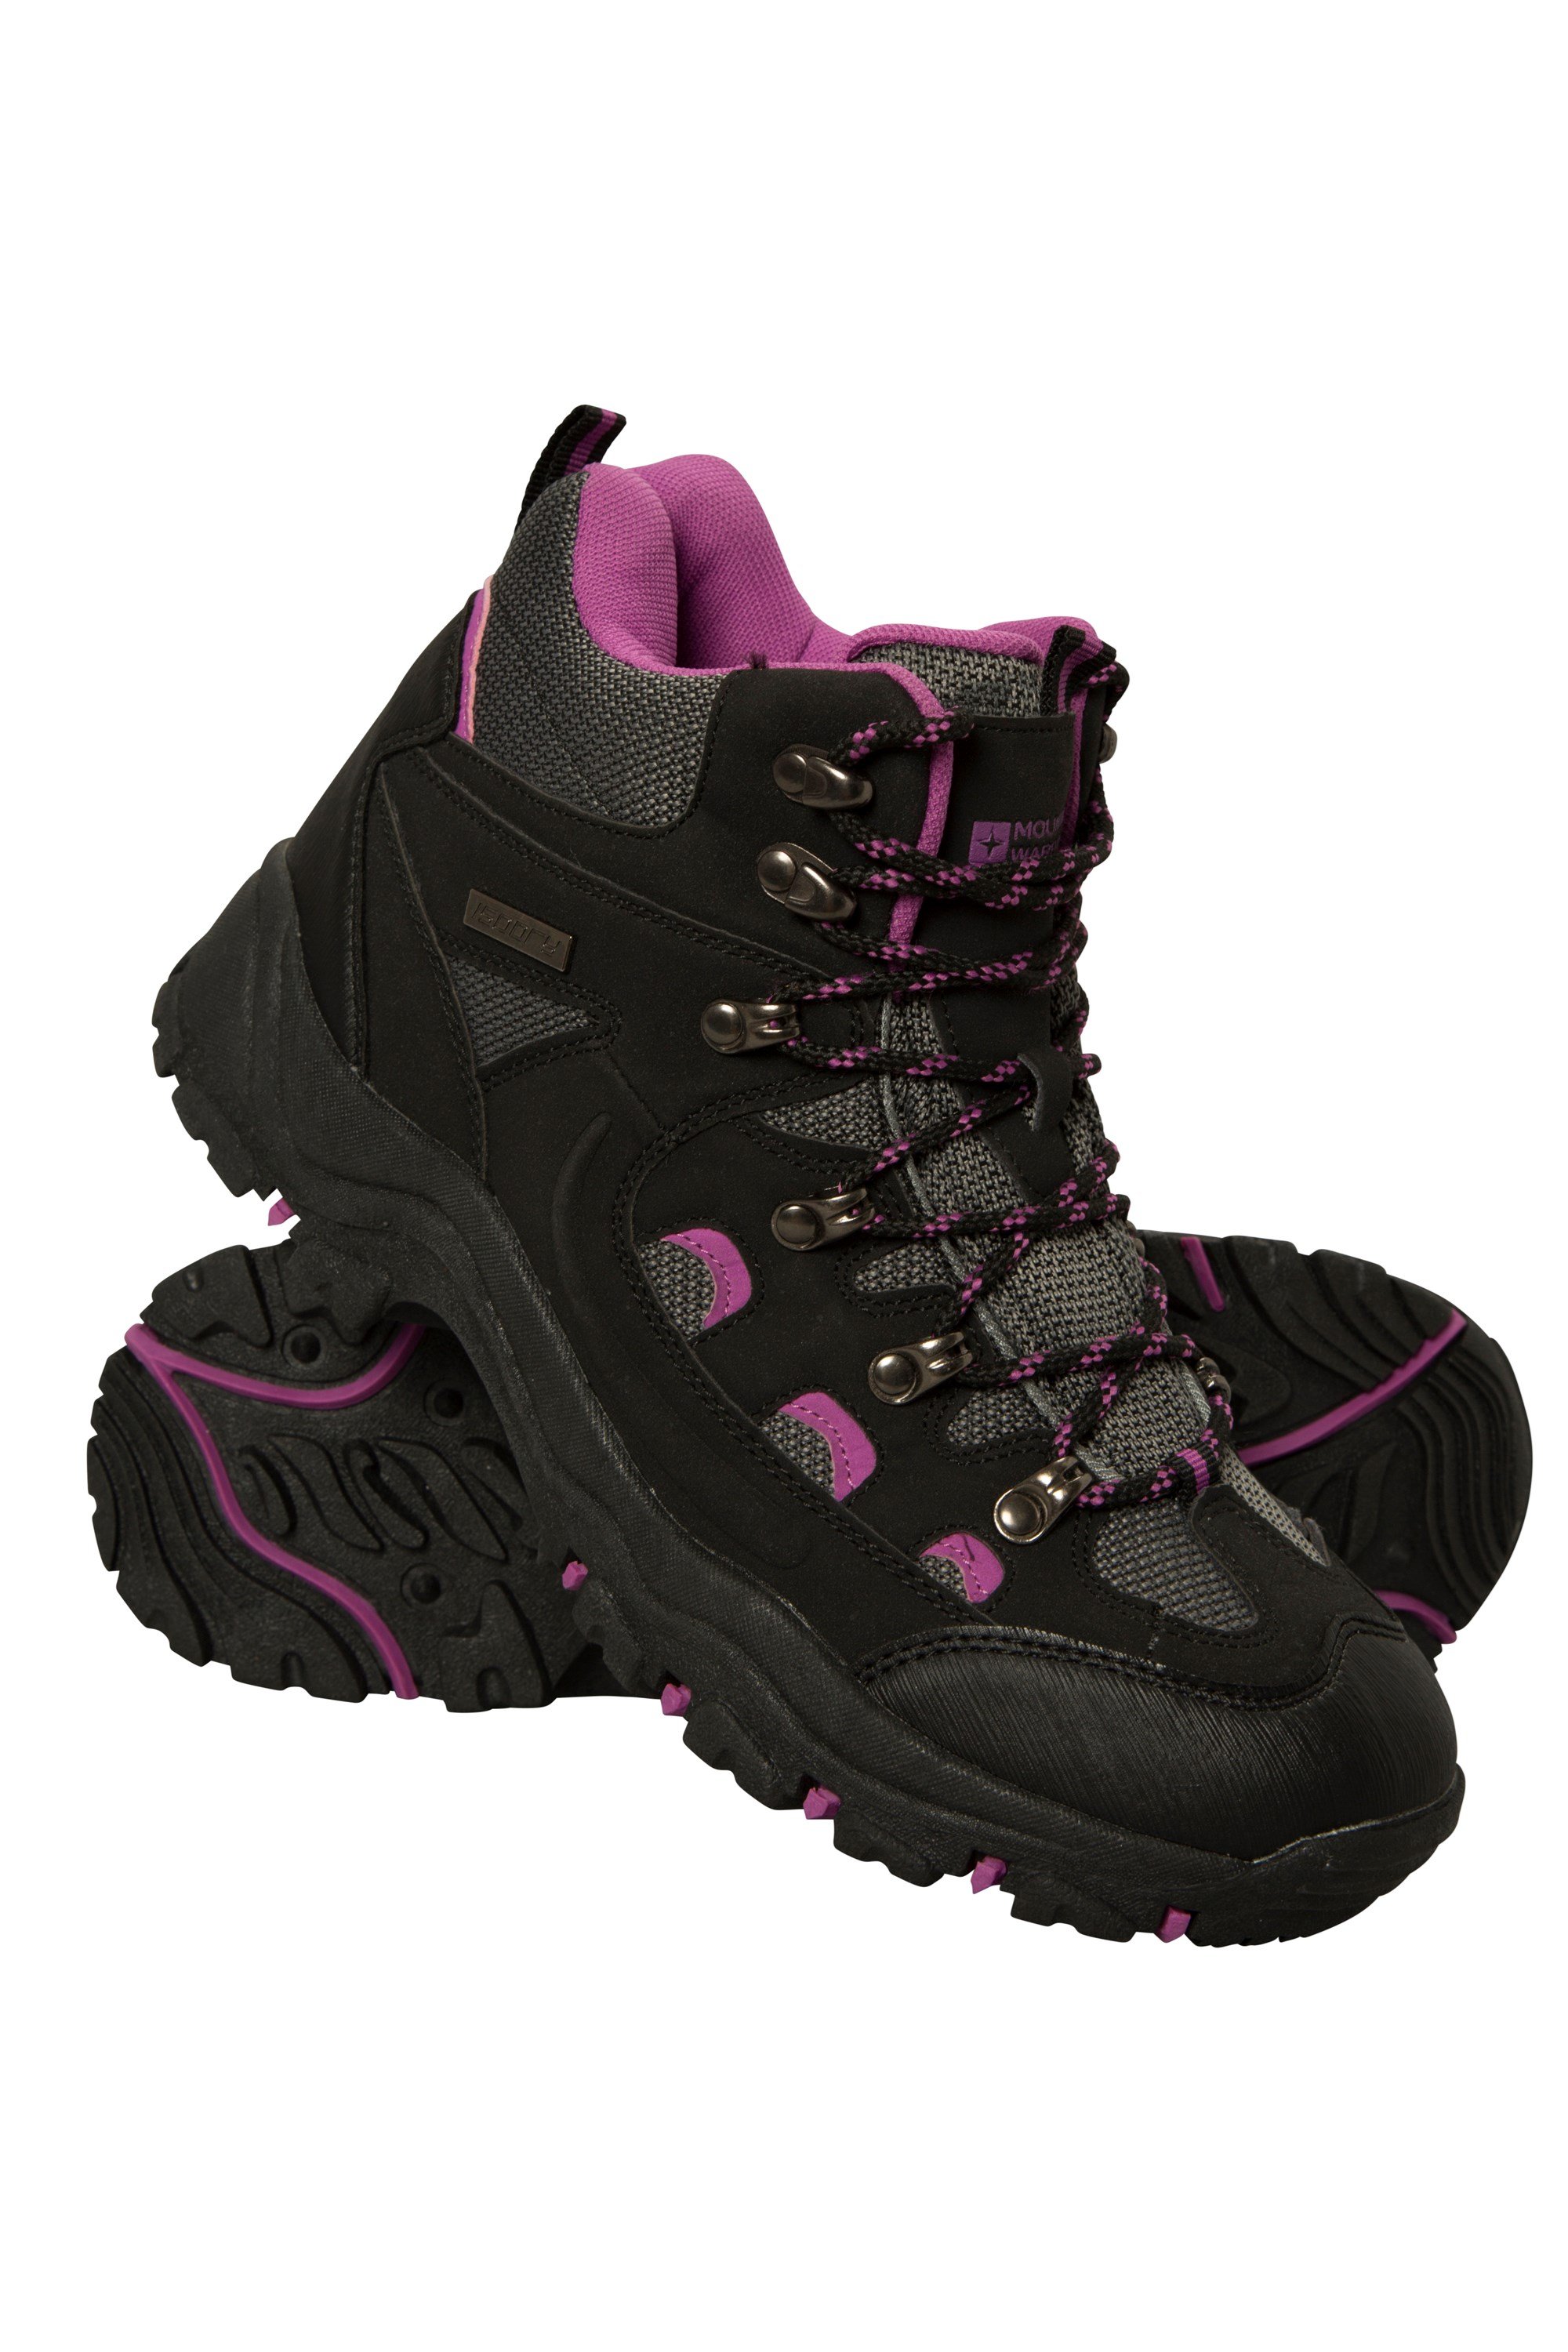 Mountain Warehouse Adventurer Womens Waterproof Boots Black